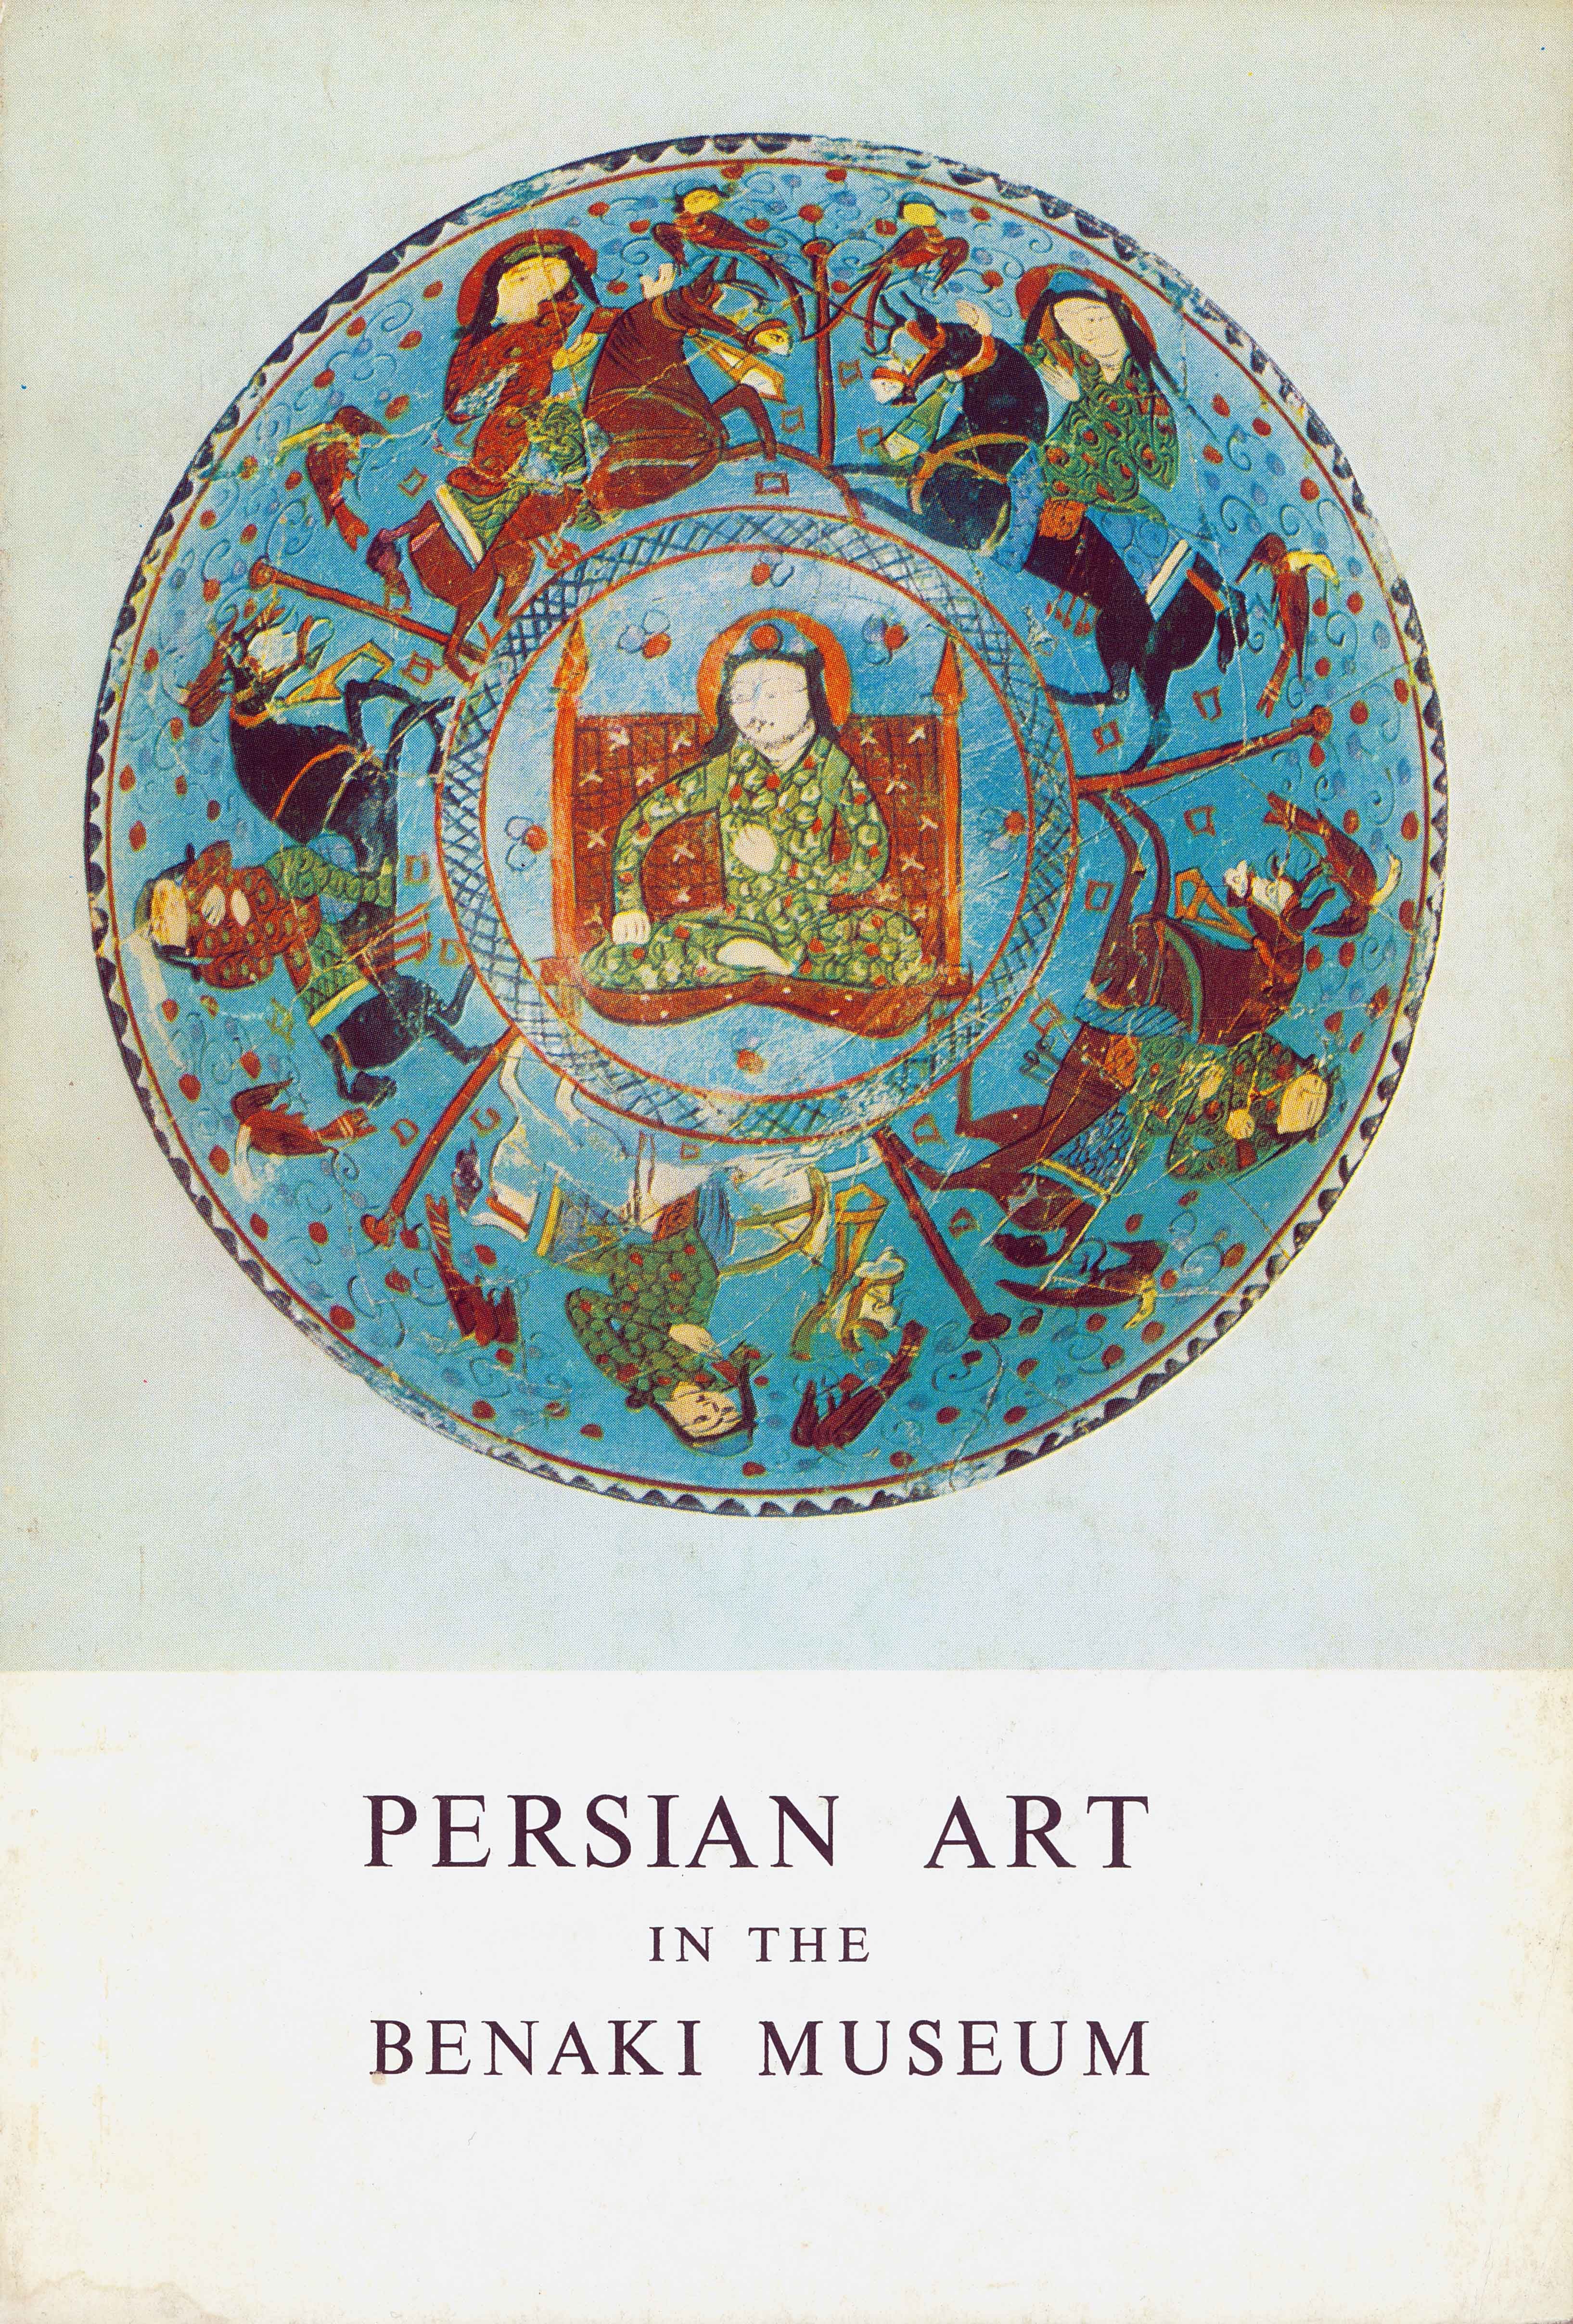 Persian art at the Benaki Museum (Η περσική τέχνη στο Μουσείο Μπενάκη)